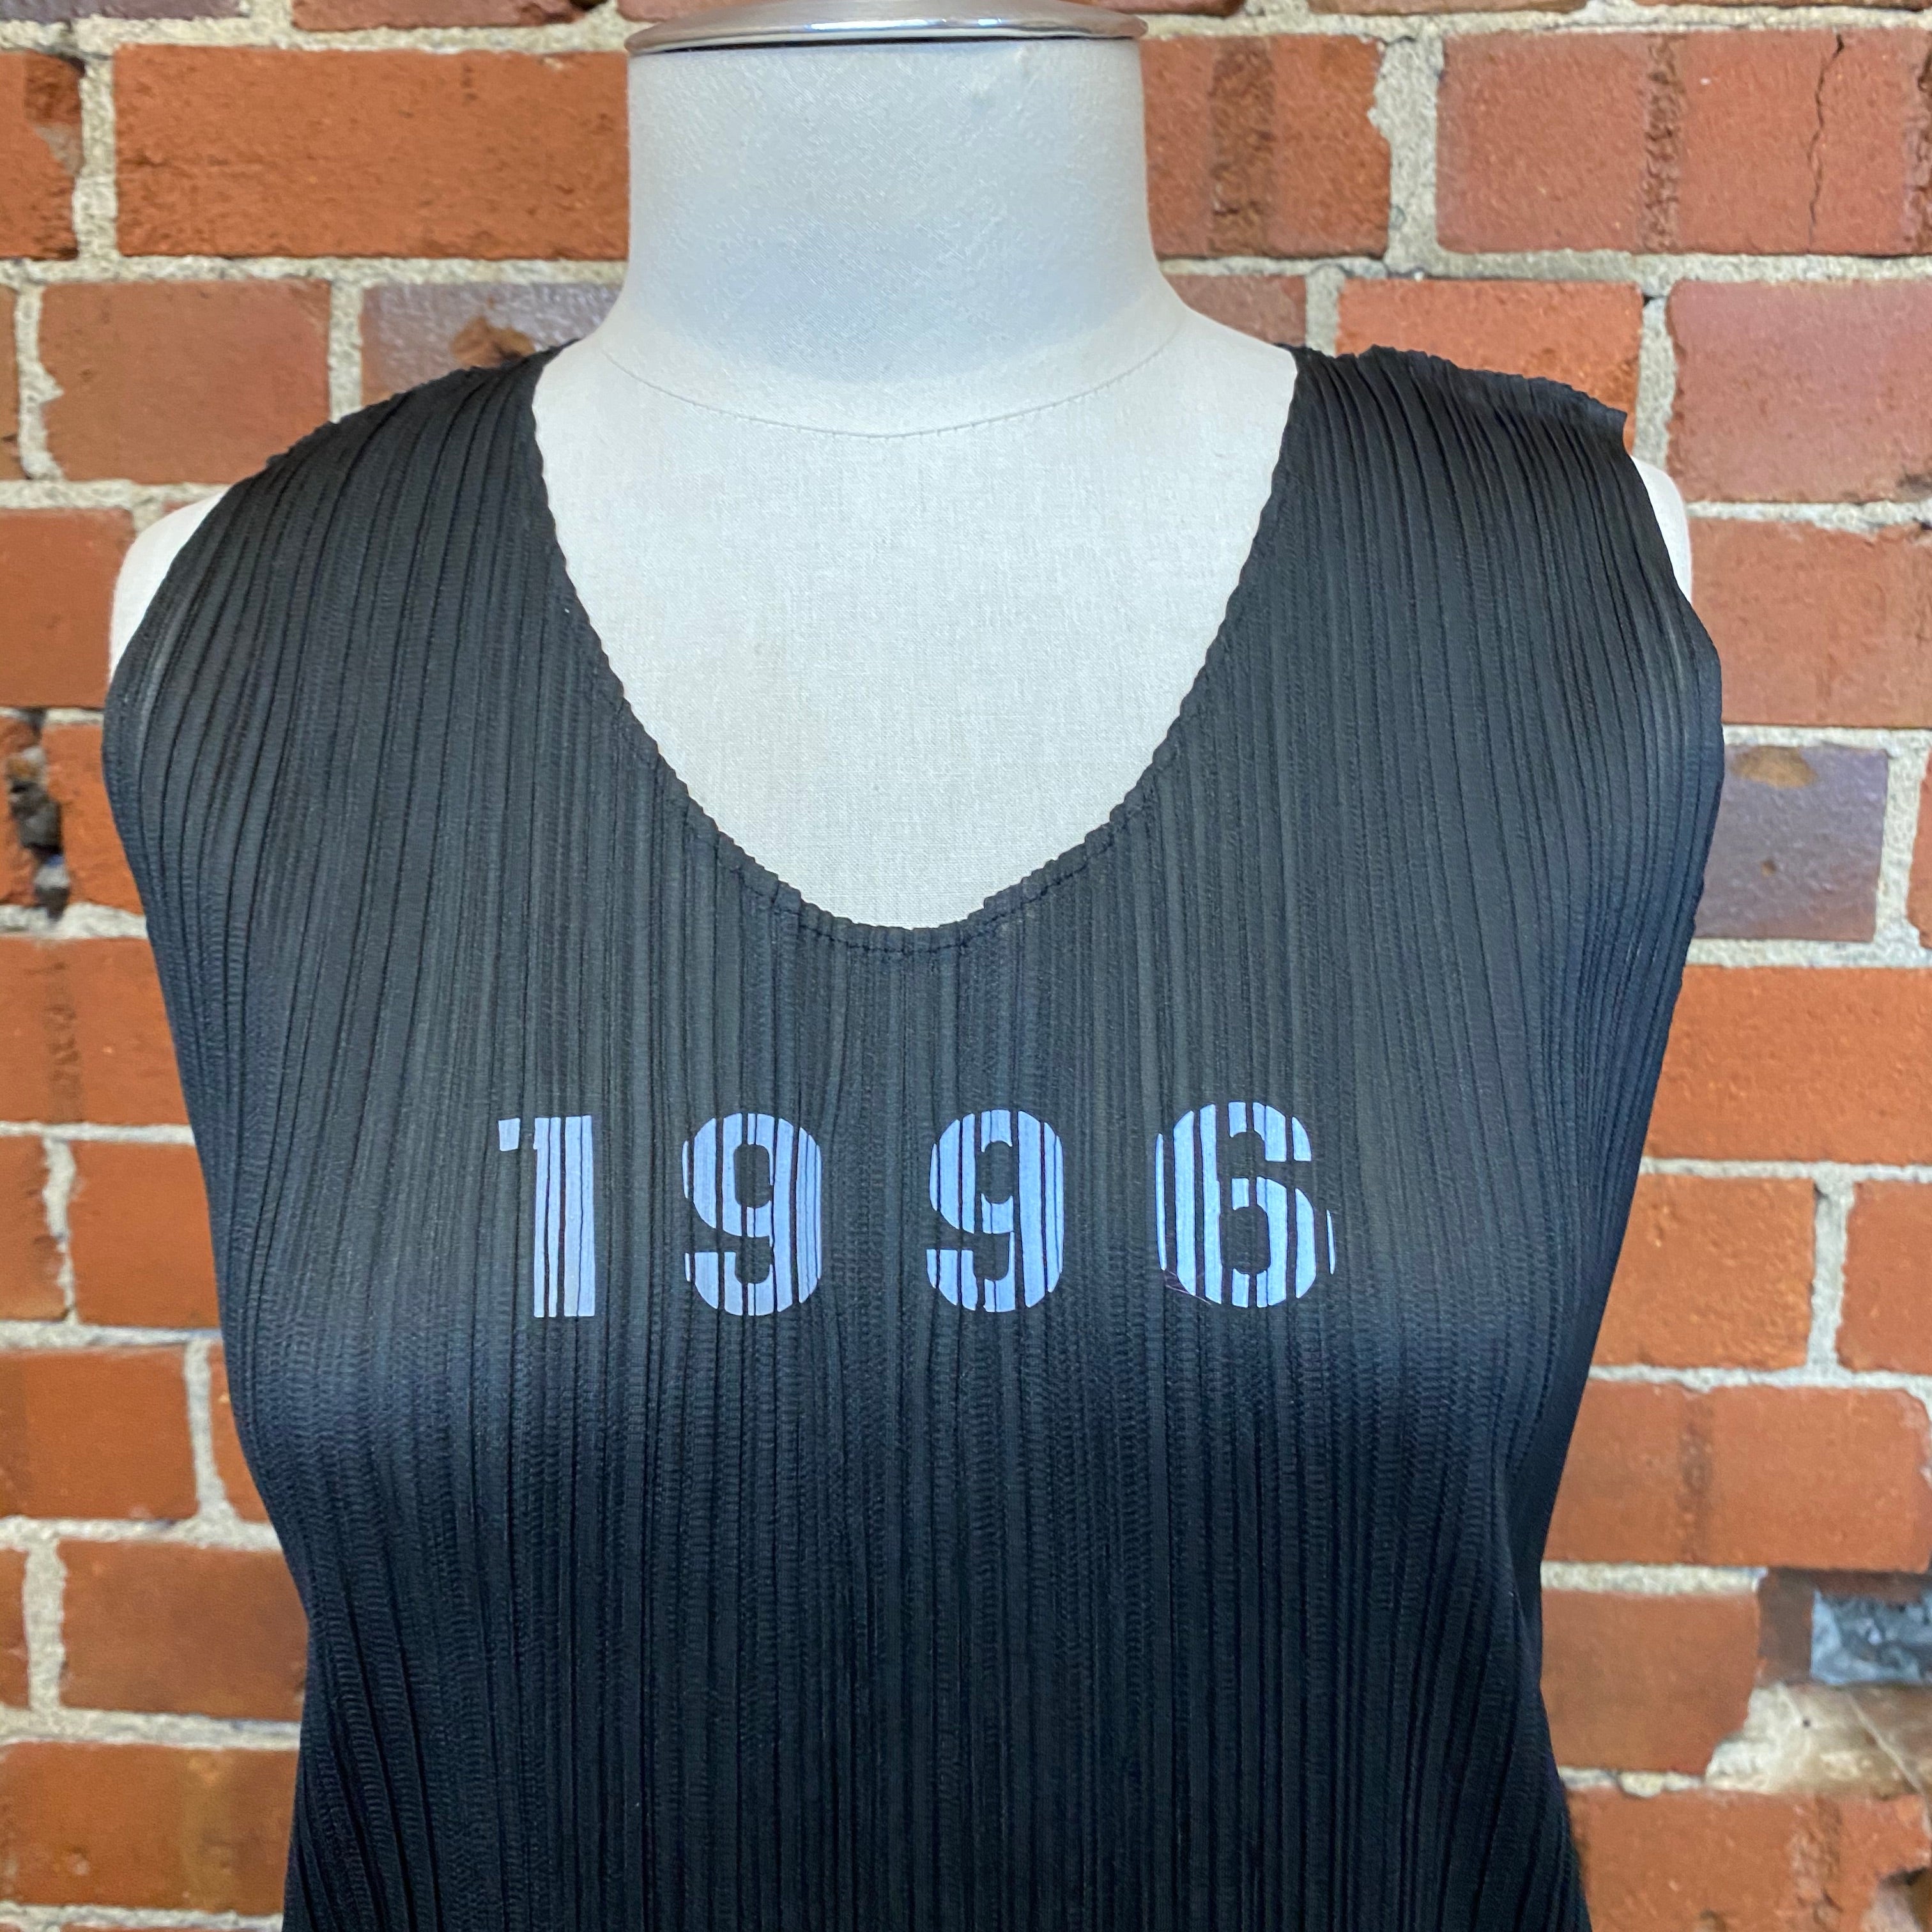 PLEATS PLEASE by ISSEY MIYAKE 1996 reflector dress!